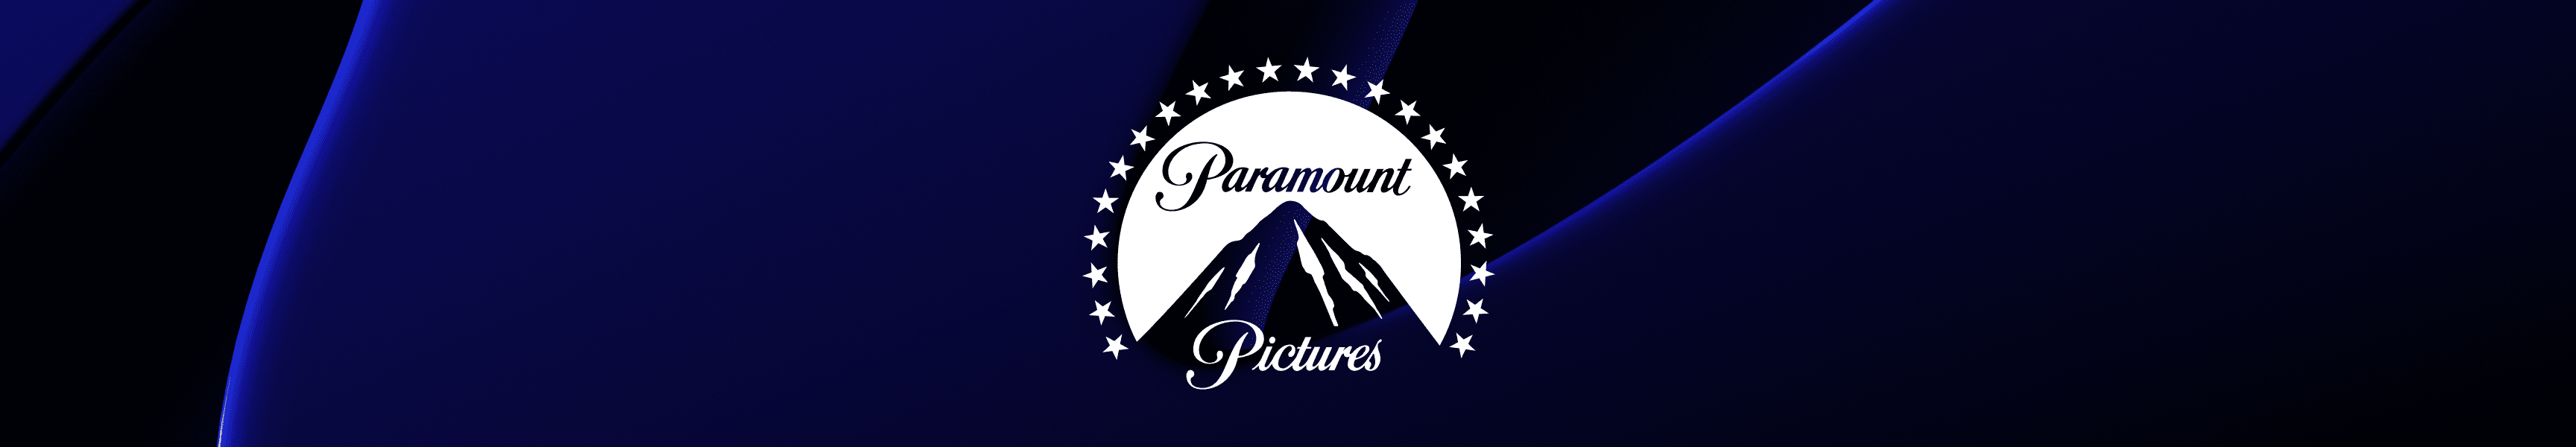 Paramount Pictures Verrerie